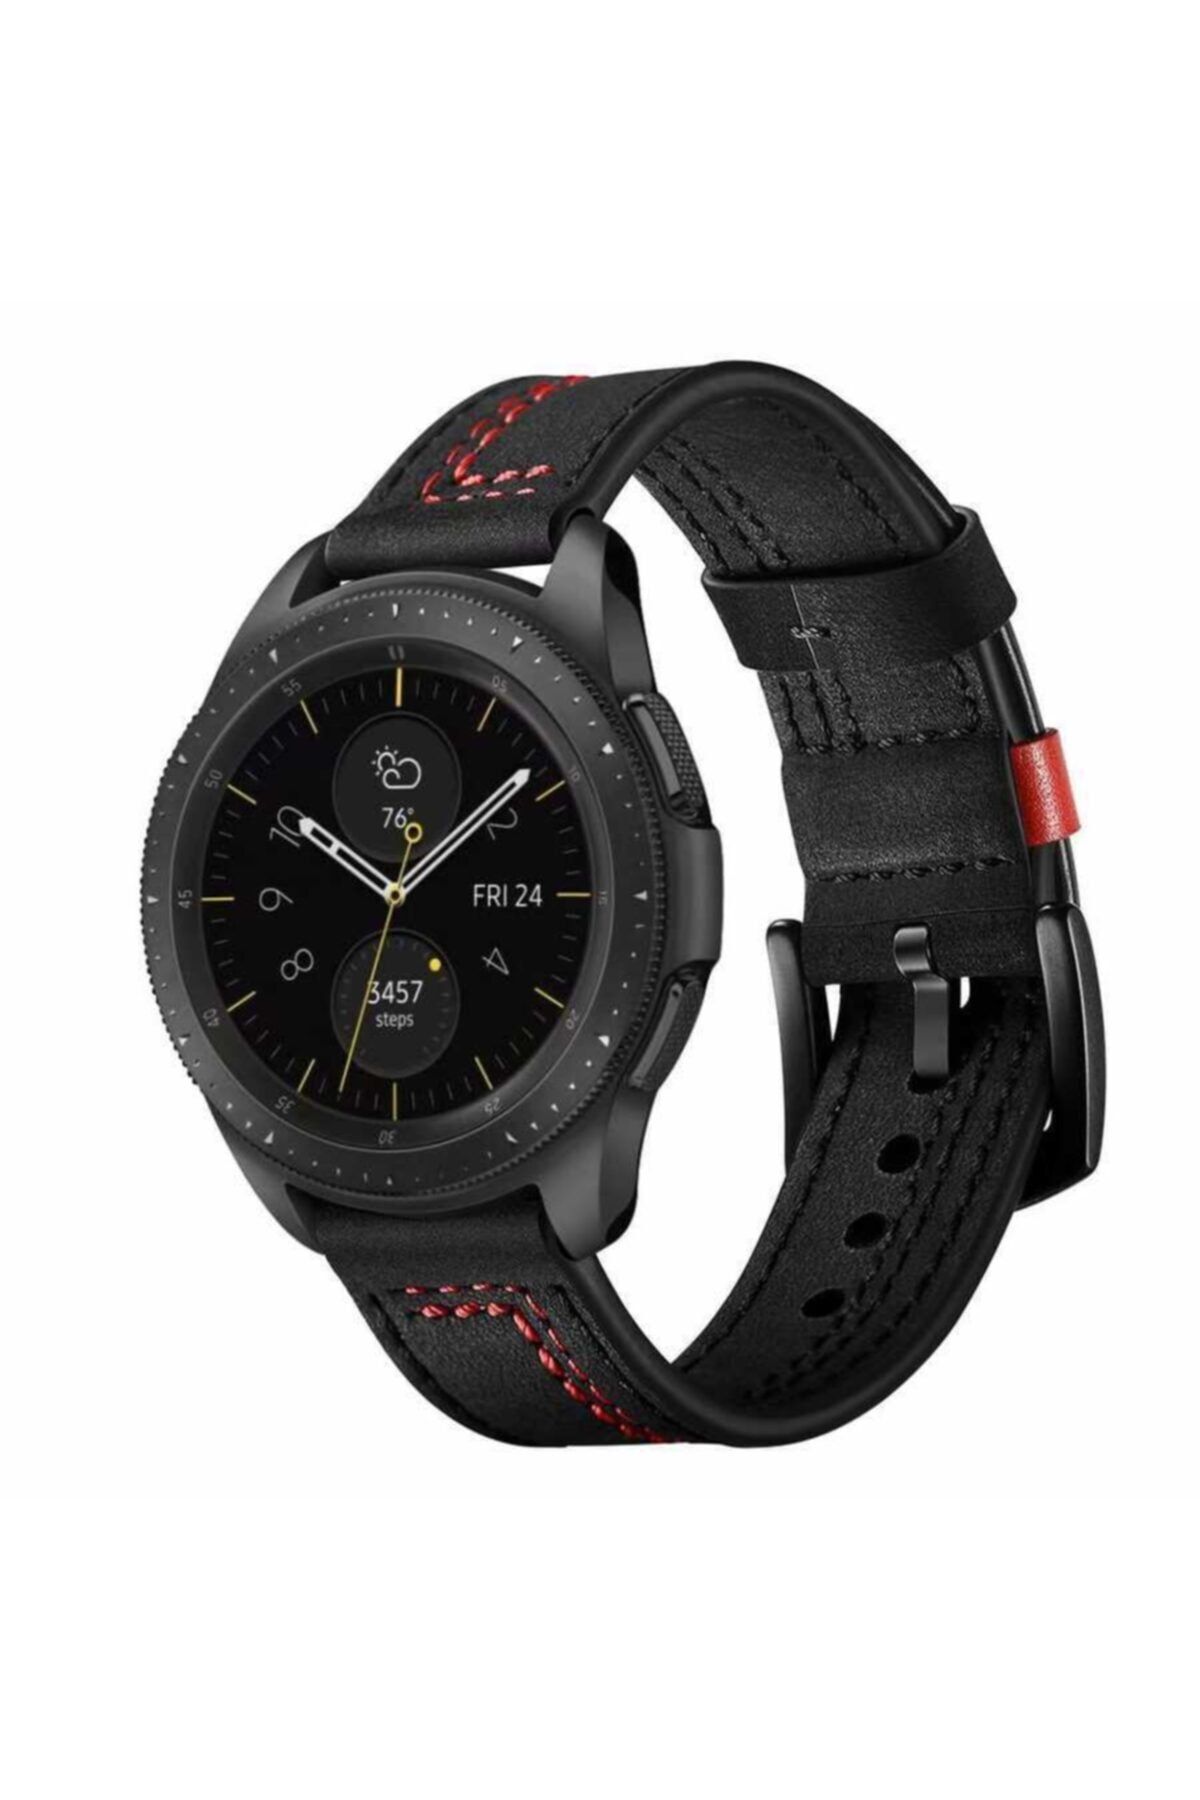 Fibaks Samsung Galaxy Watch Gear S3 (22MM) Krd-19 Akıllı Saat Kordonu Deri Kordon Kayış Bileklik